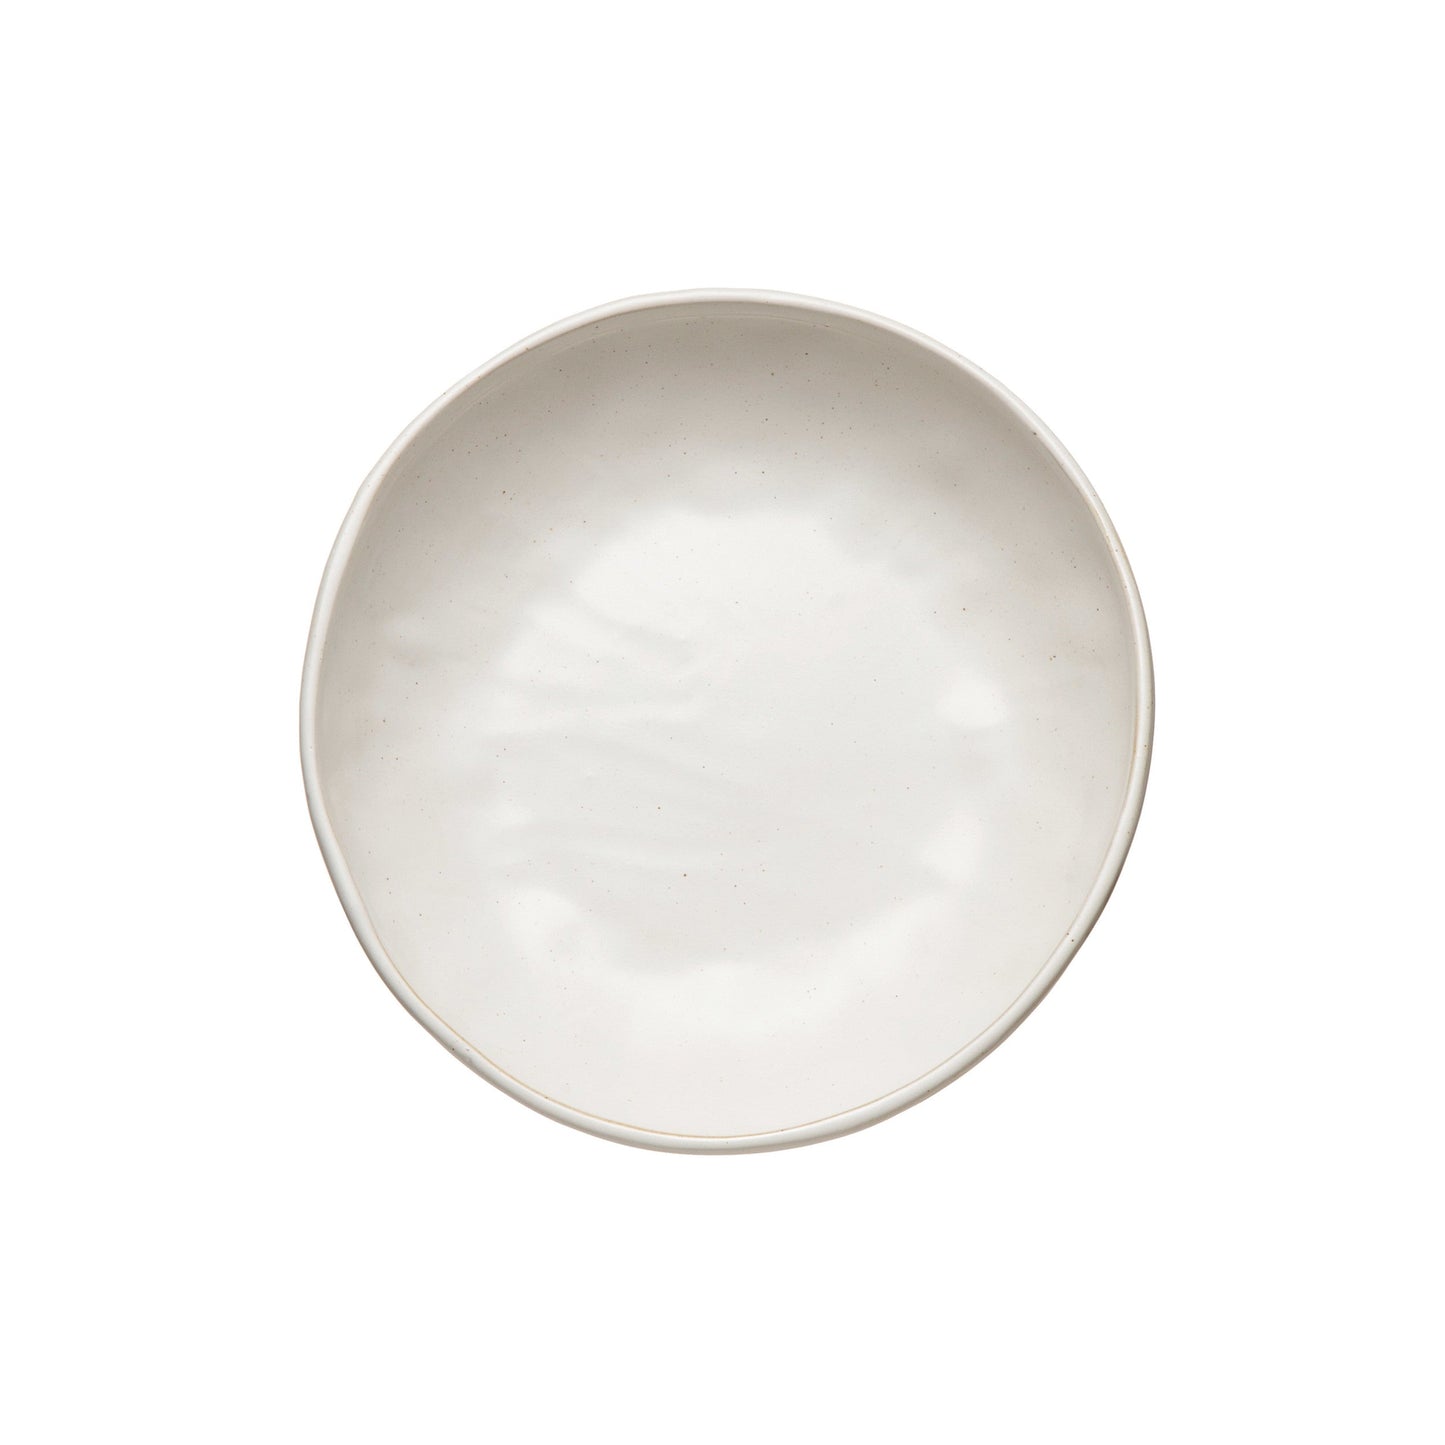 bowl-con-pedestal-de-ceramica